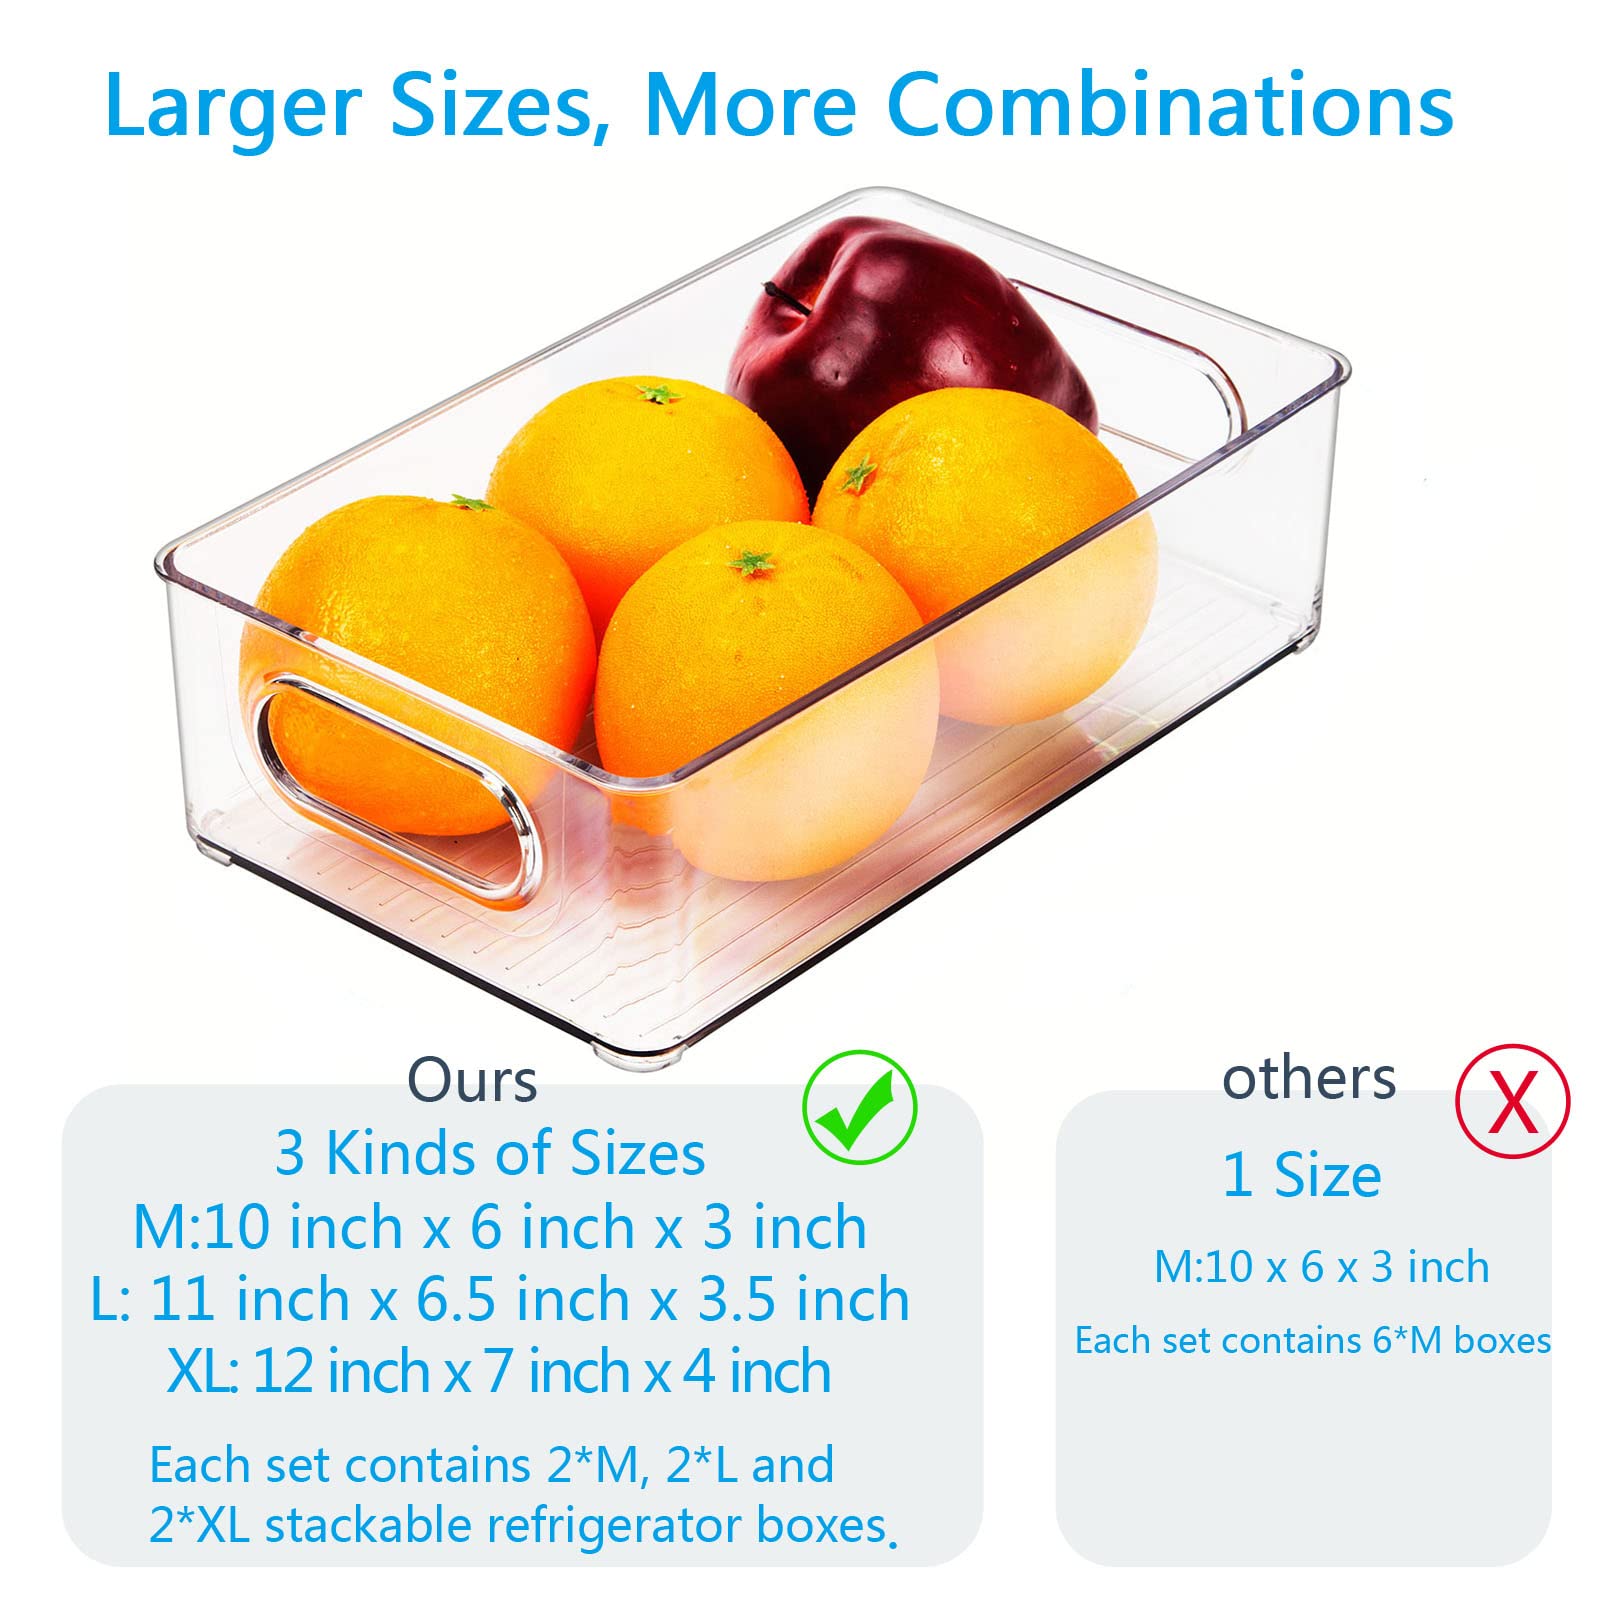 Eco Moda Set Of 6 Refrigerator Organizer Bins - 3 Sizes Stackable Plastic Clear Food Storage Bin